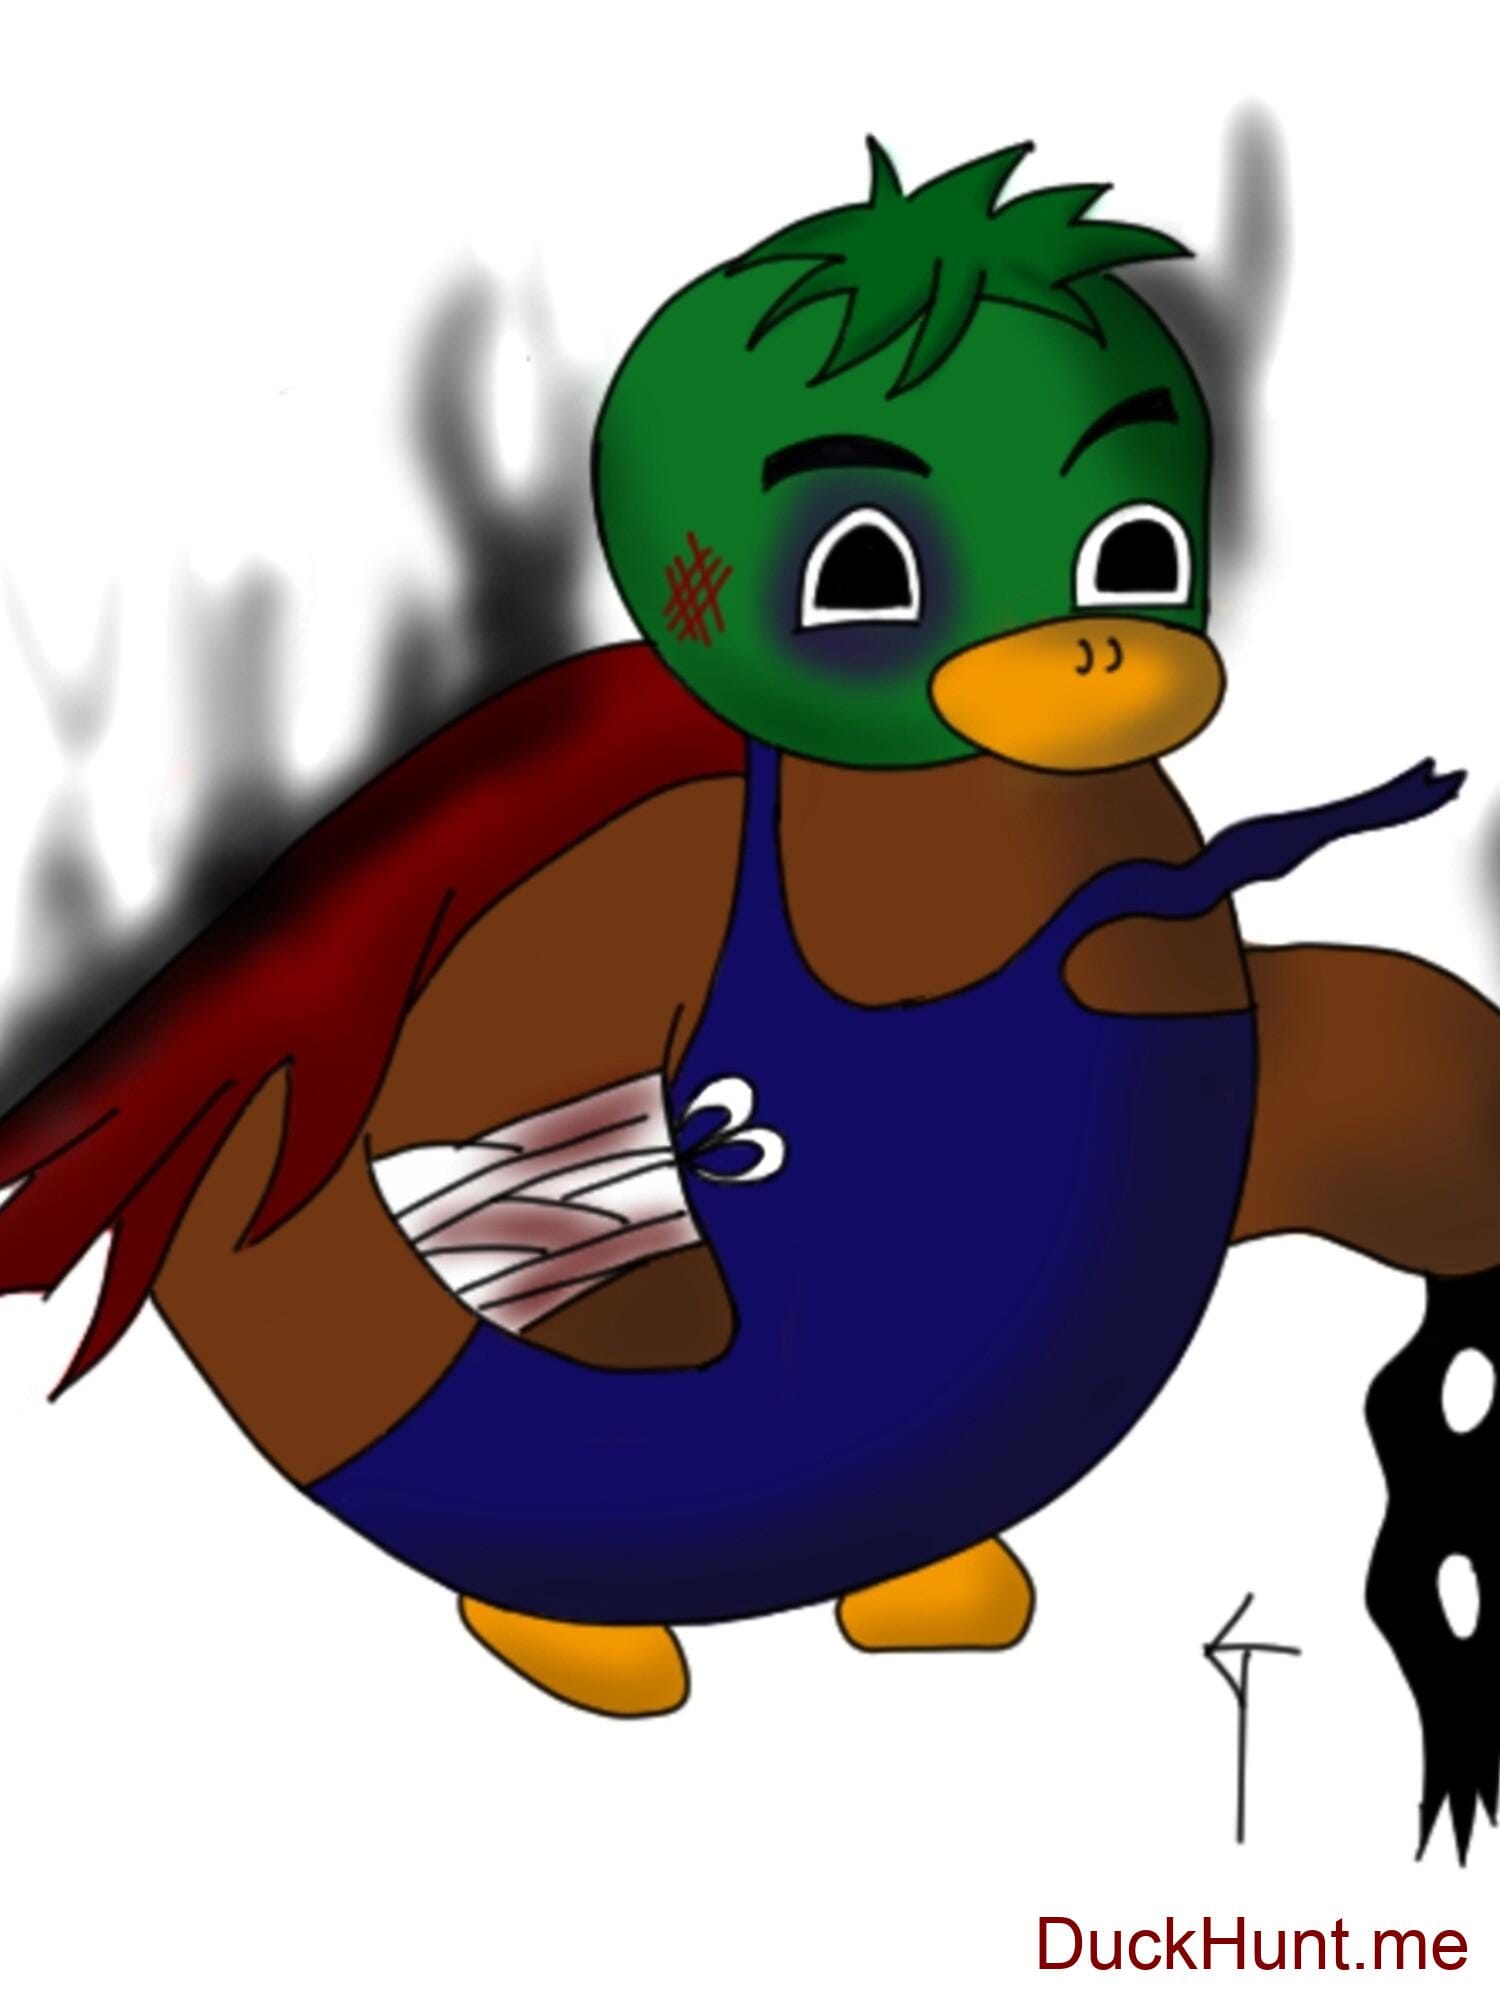 Dead Boss Duck (smoky) Black Chiffon Top alternative image 2